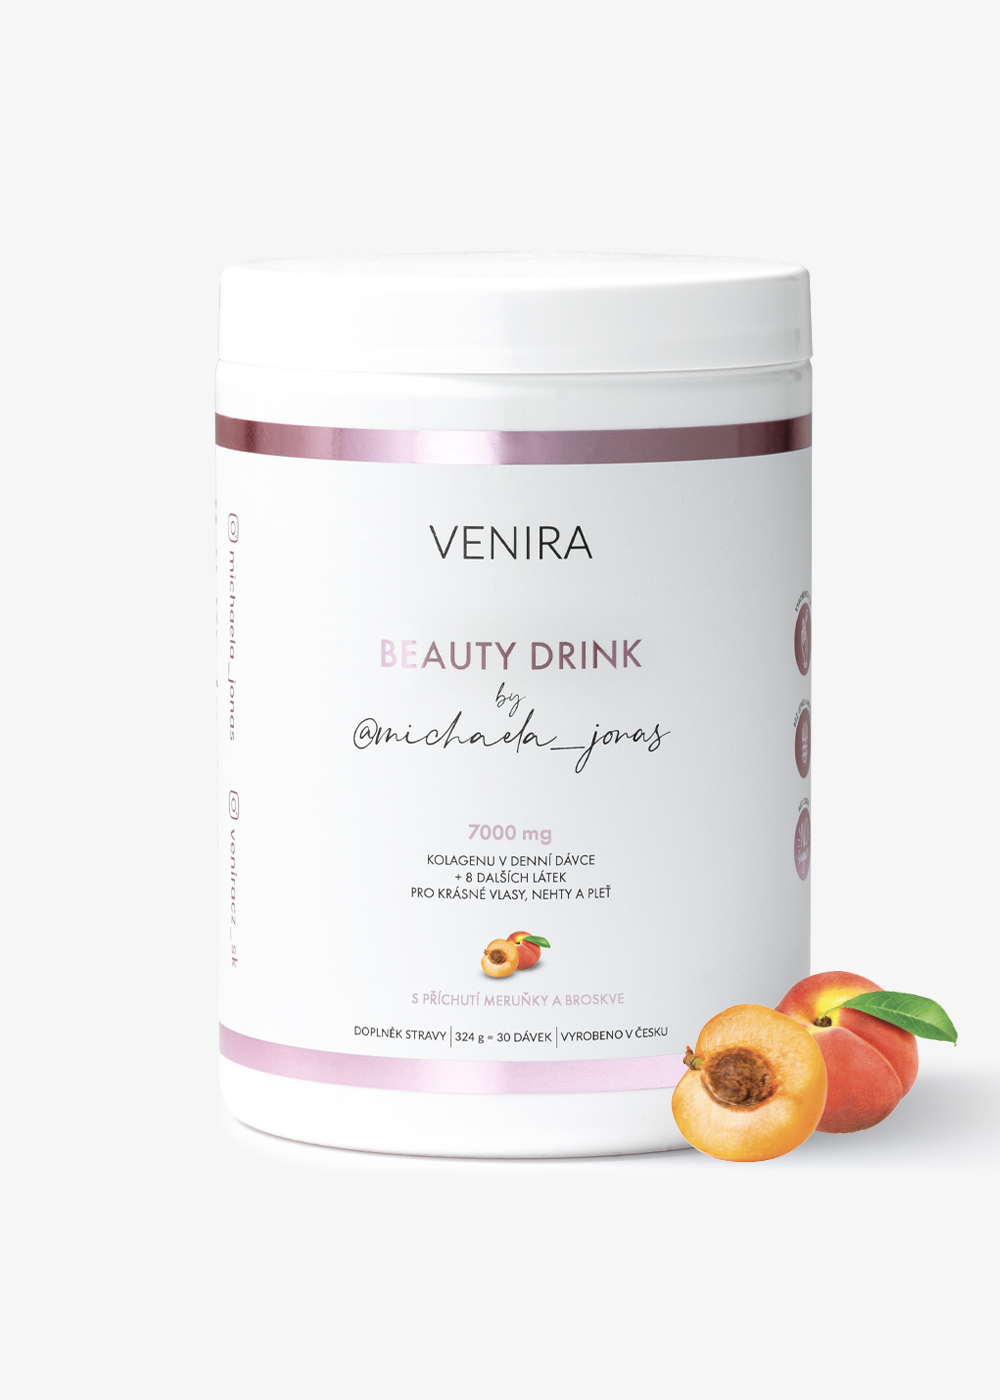 VENIRA beauty drink by @michaela_jonas, meruňka a broskev, 324 g